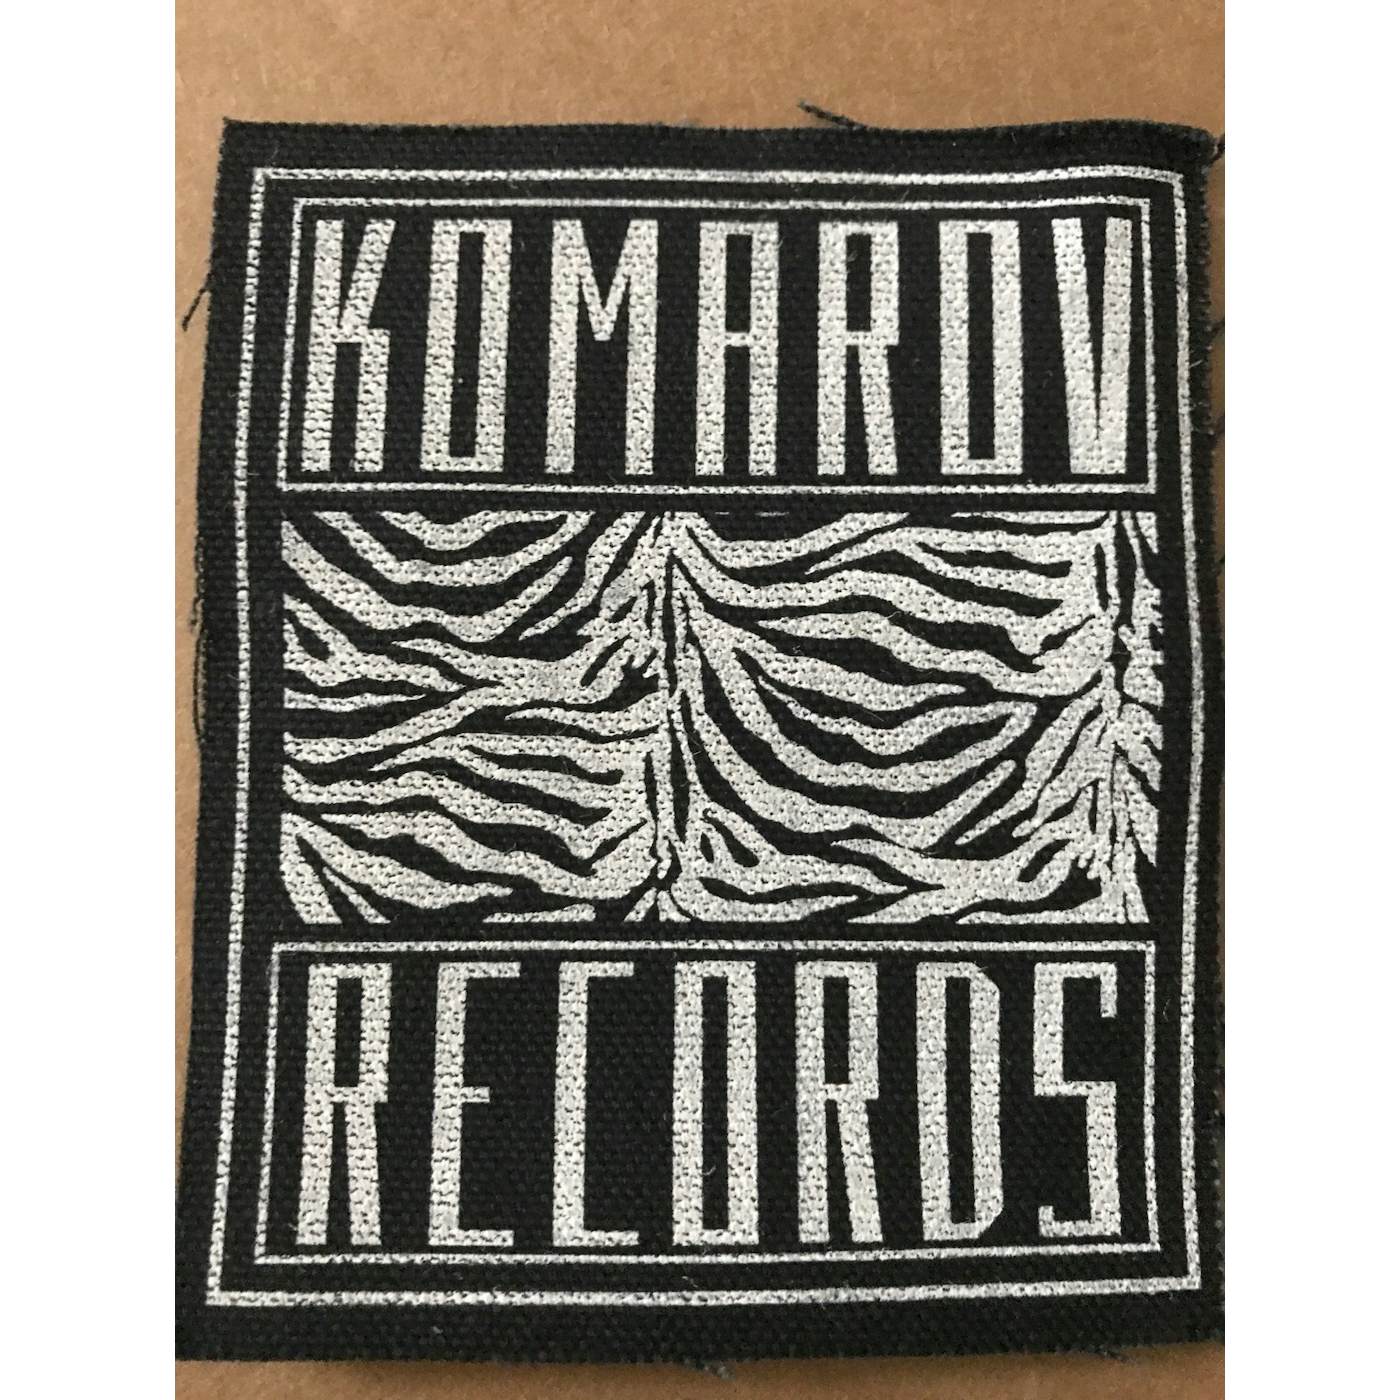 Black Mesa Records  Komarov Records Patch